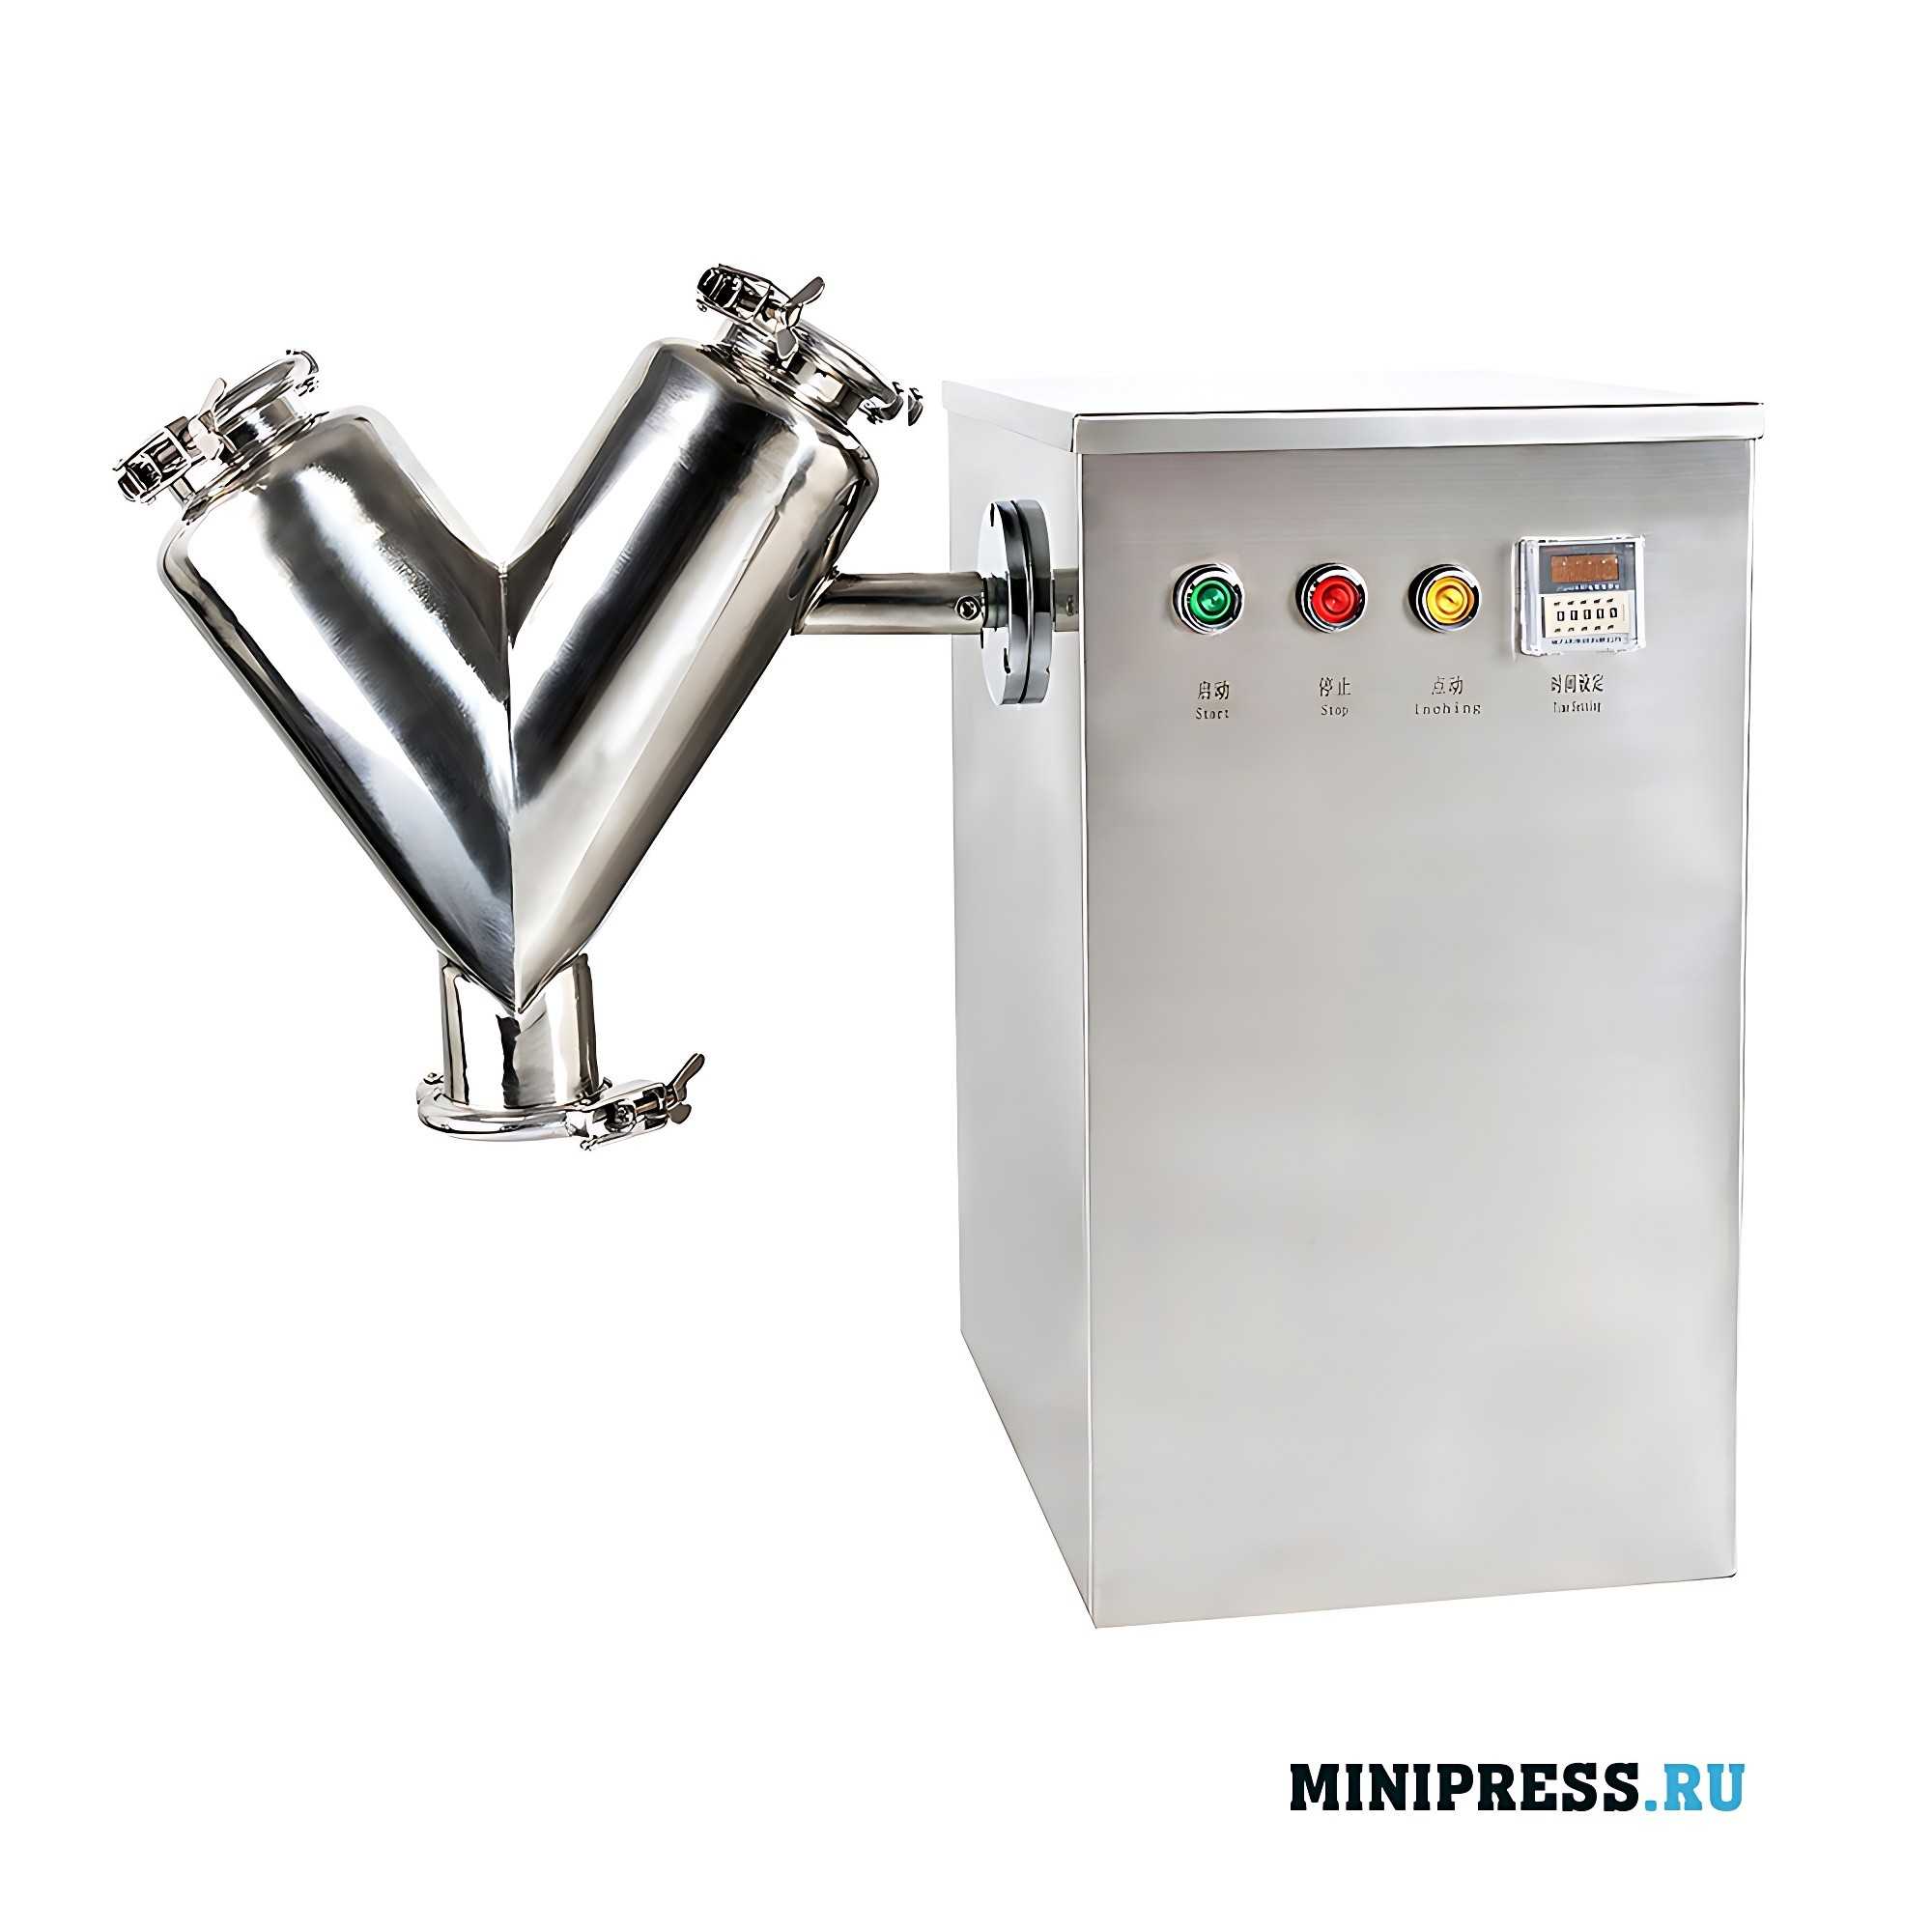 V-mixer for powders VM-14